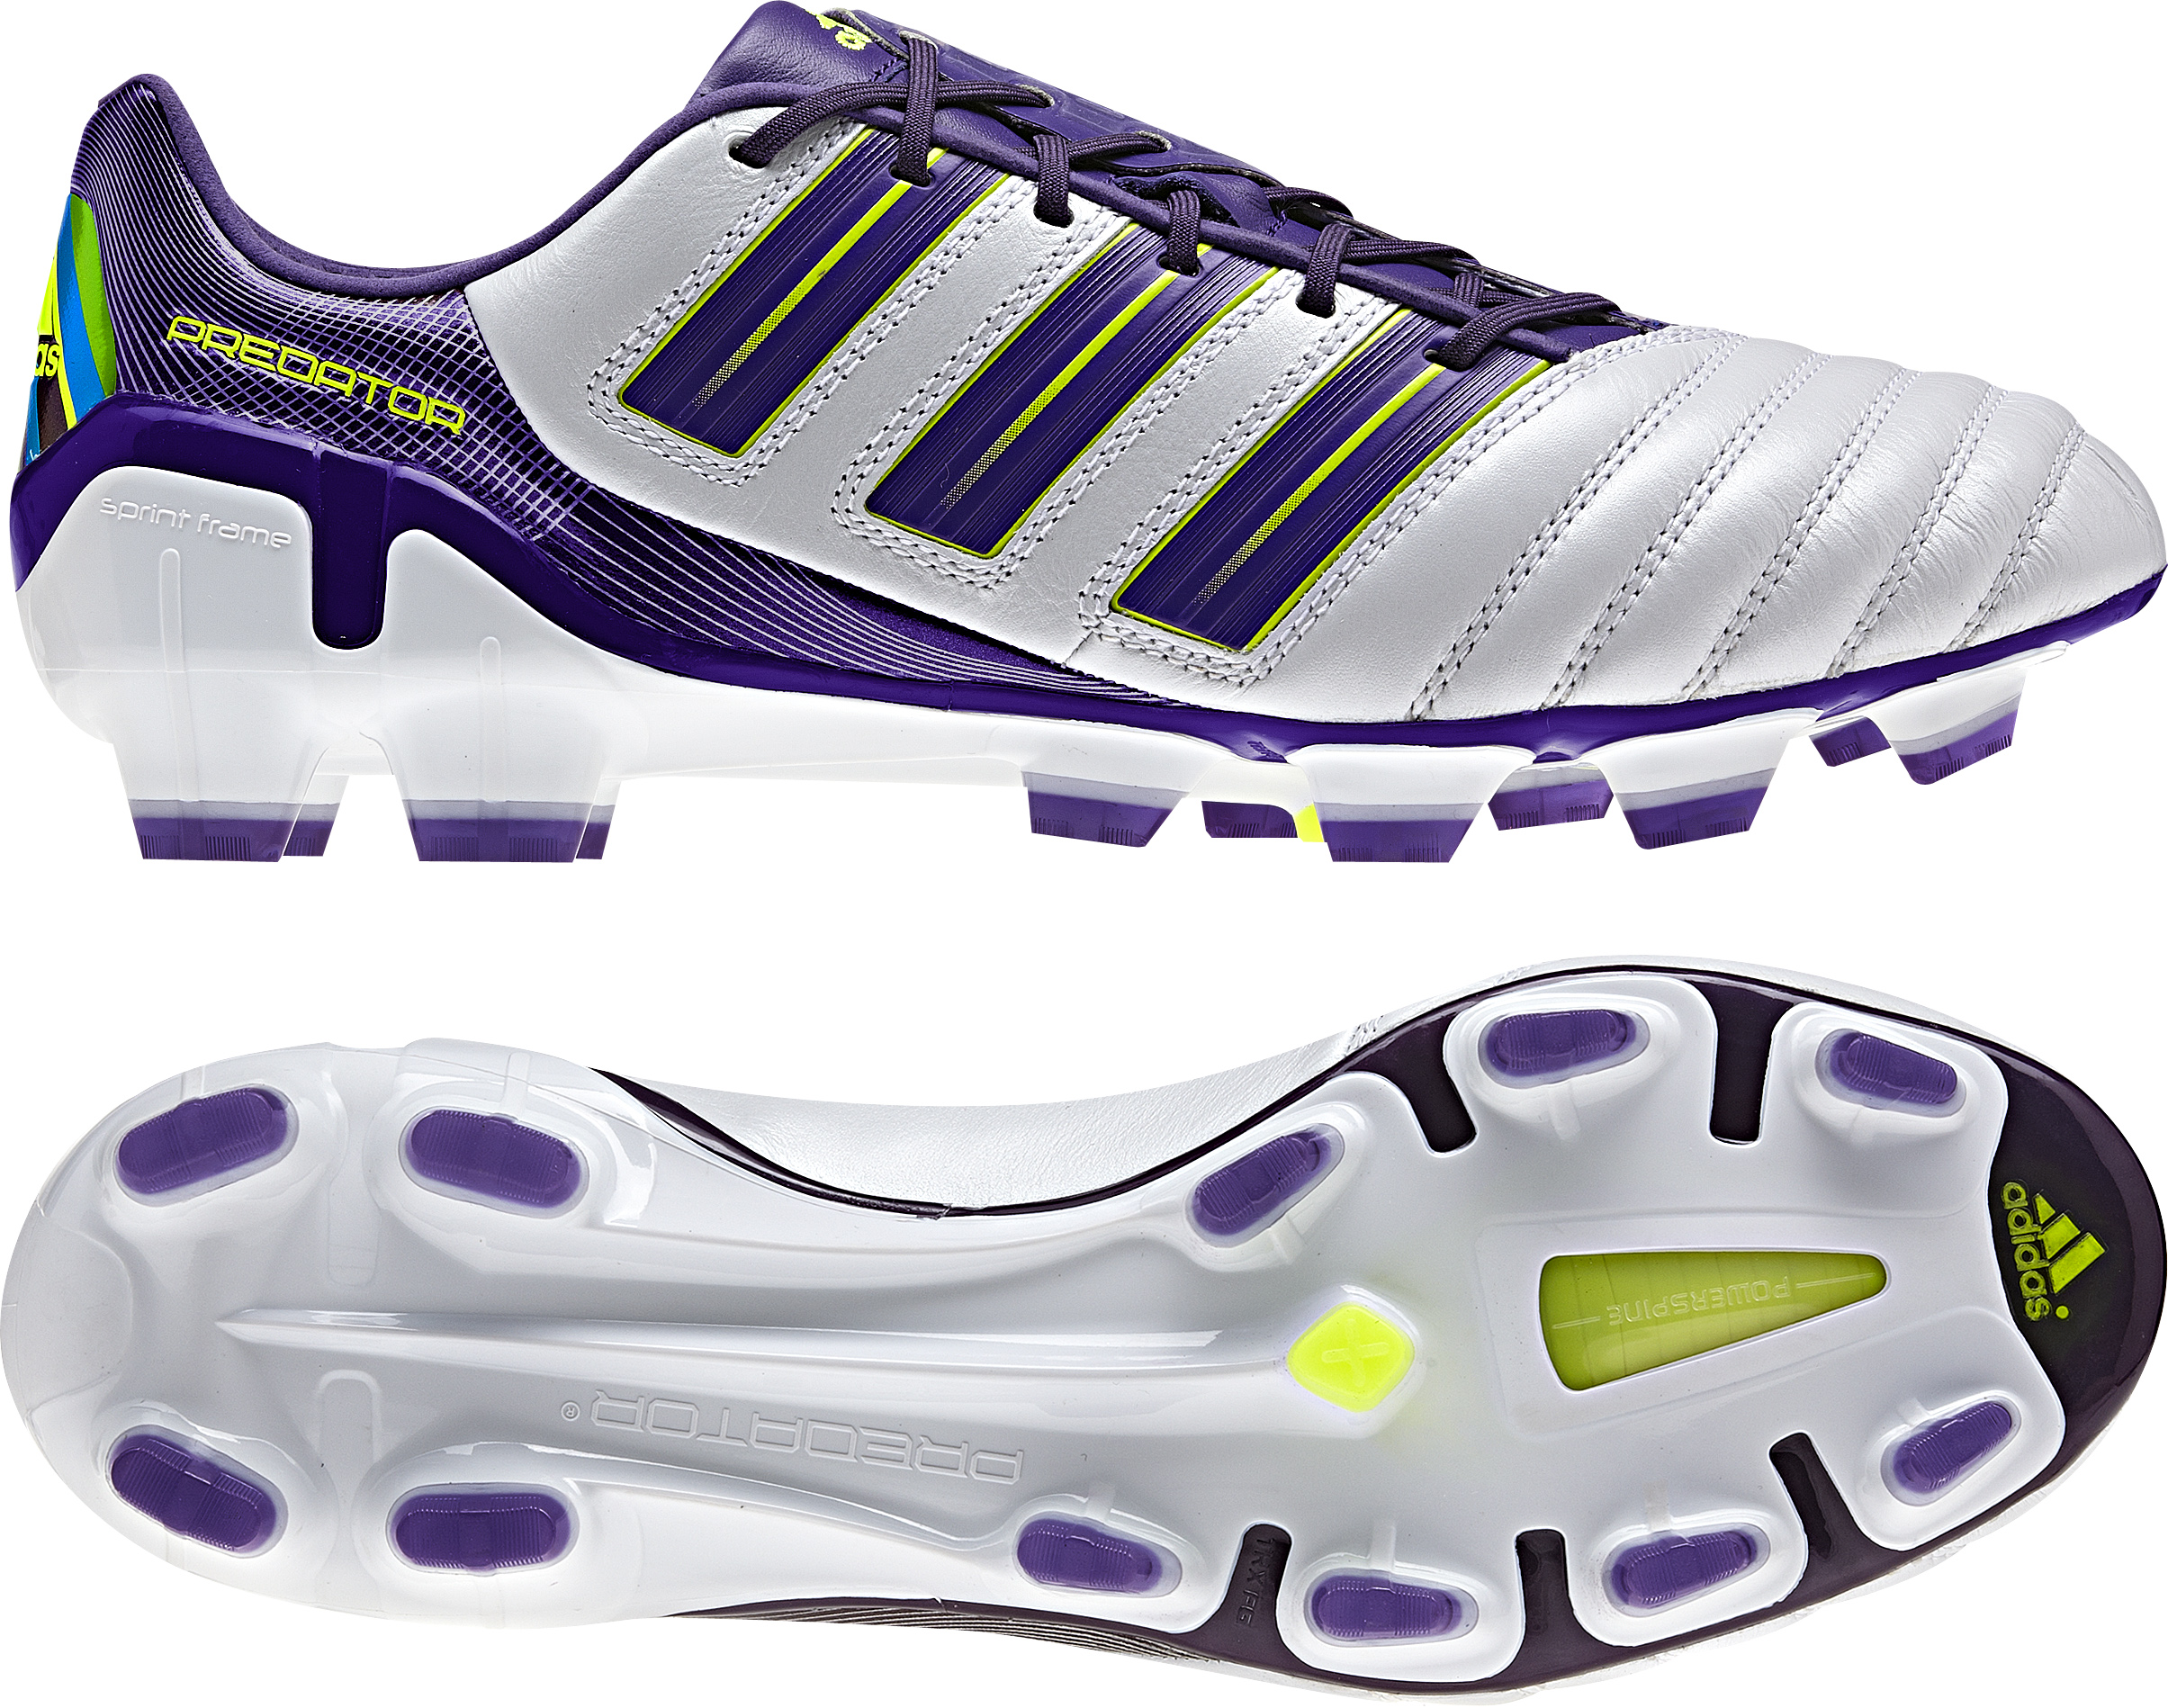 adidas sprintframe football boots